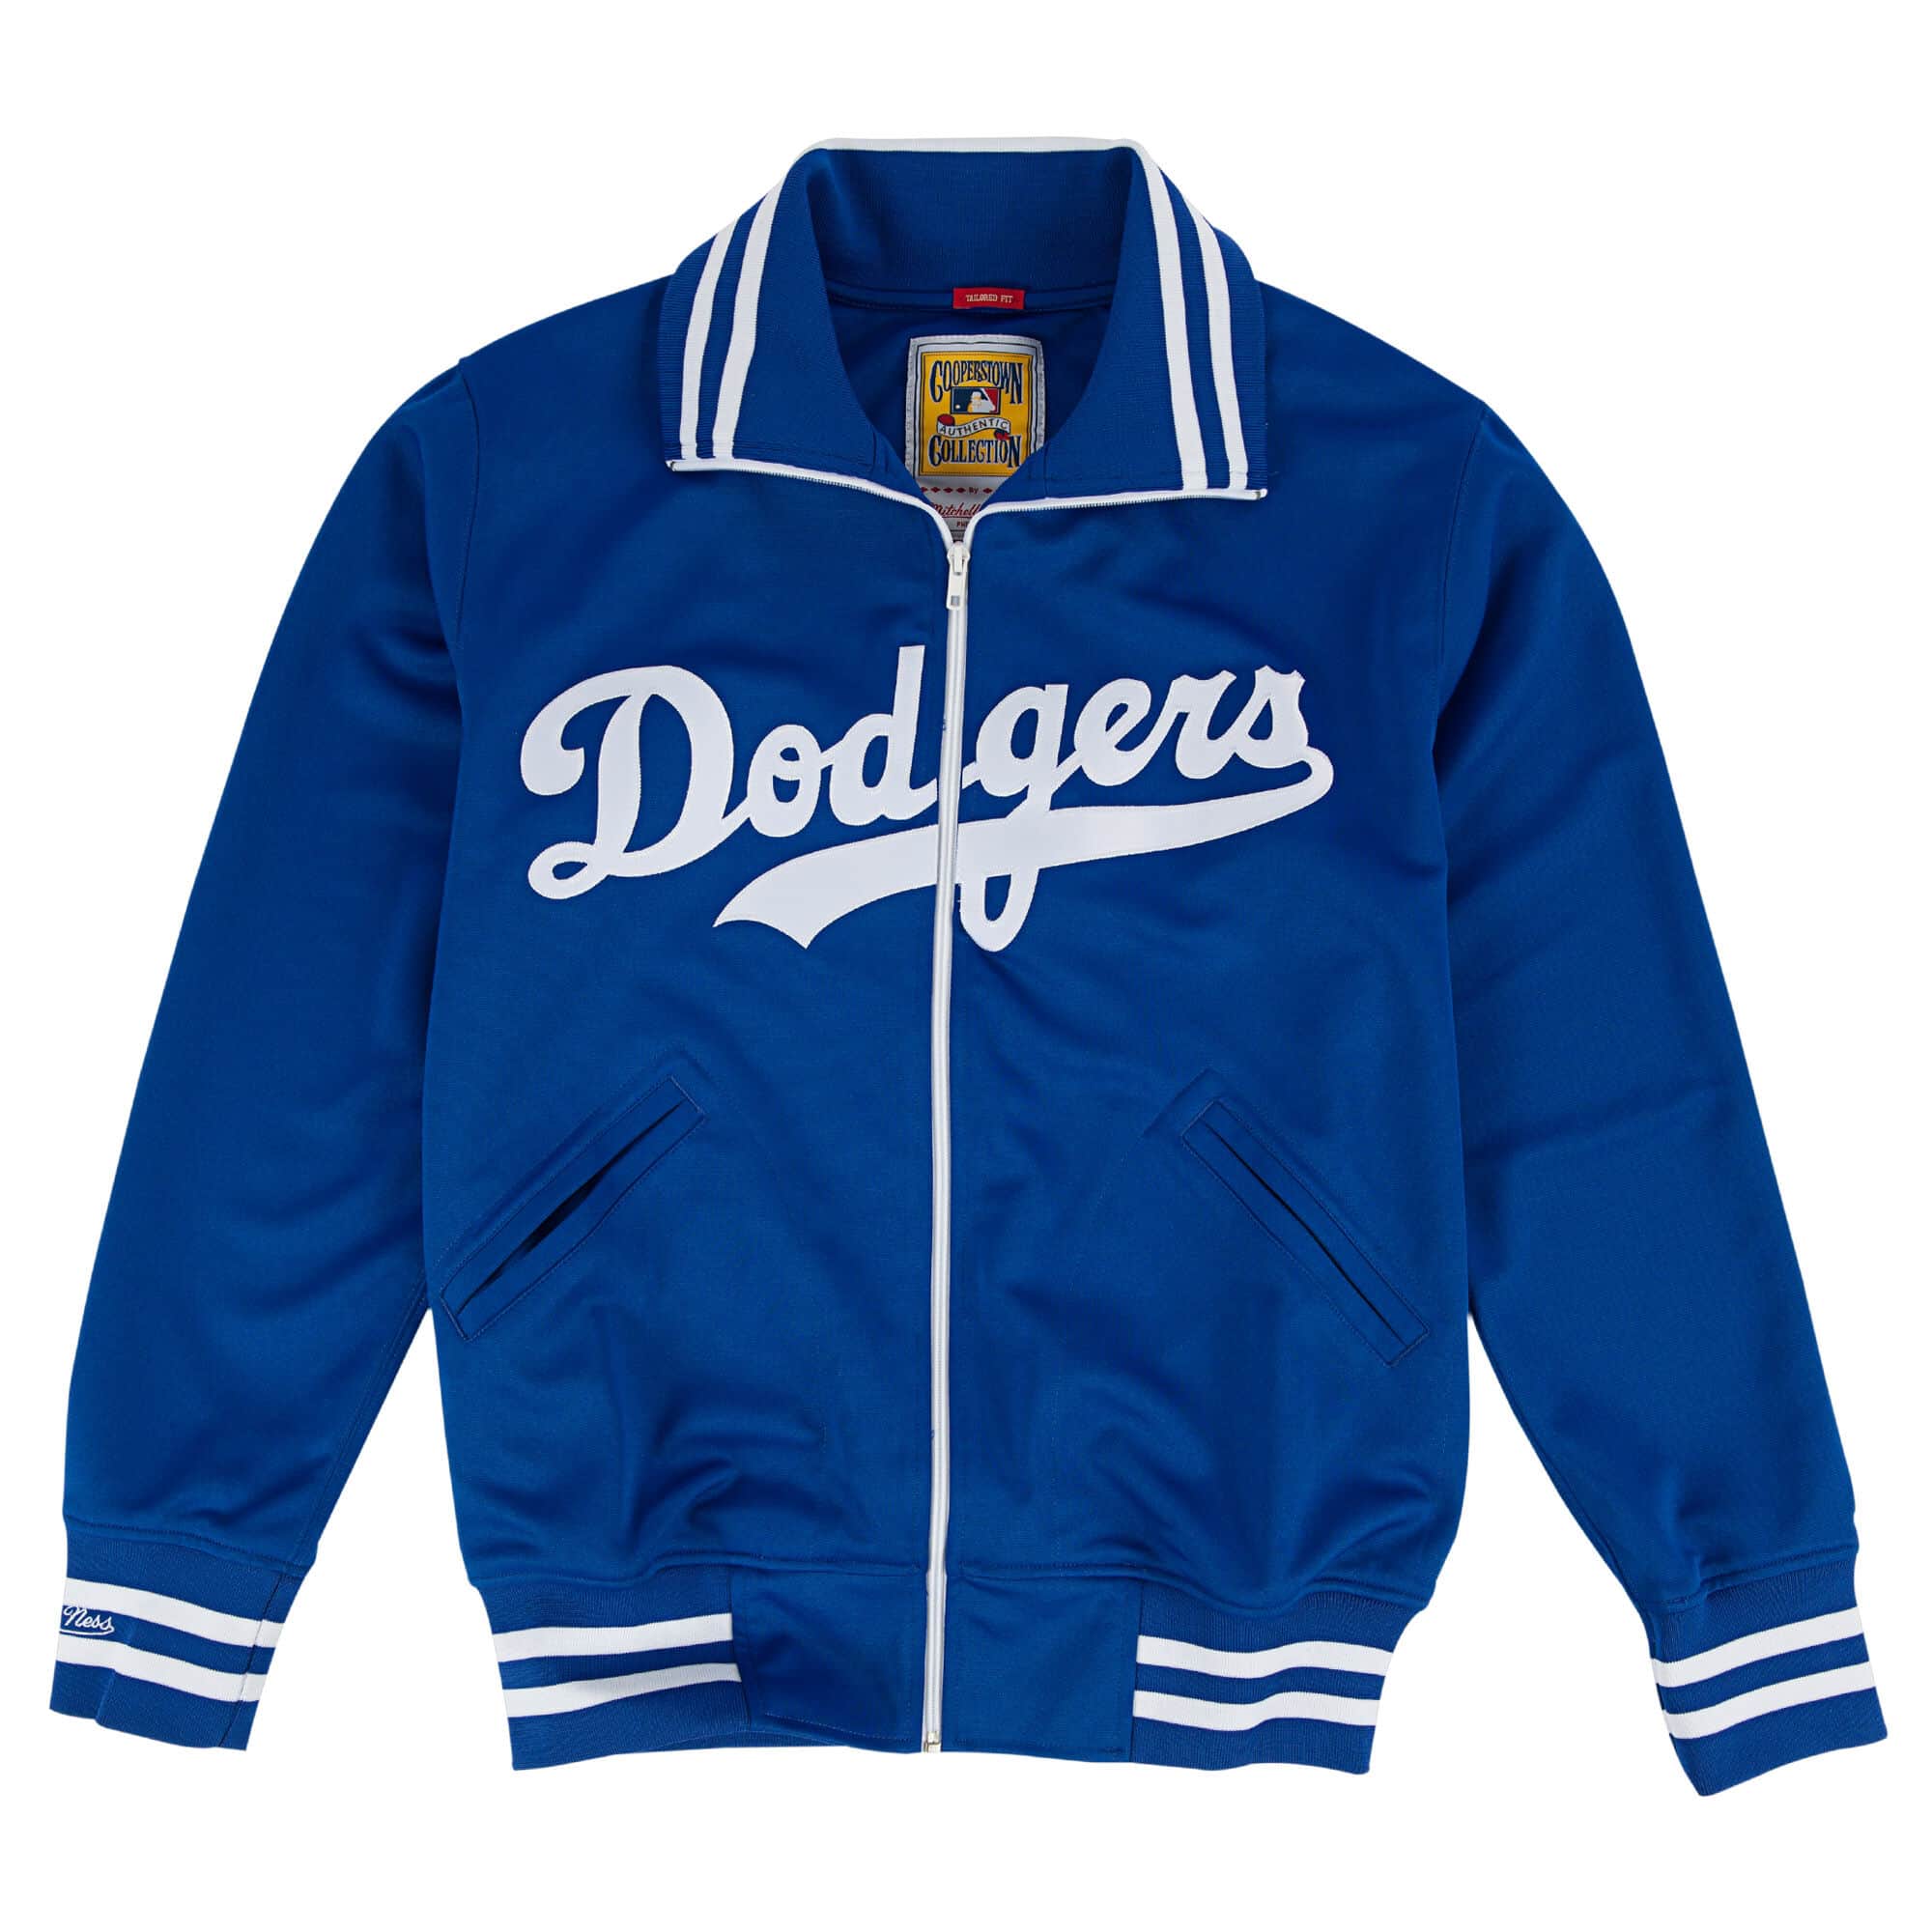 Men's La Dodgers Bomber Leather Jacket